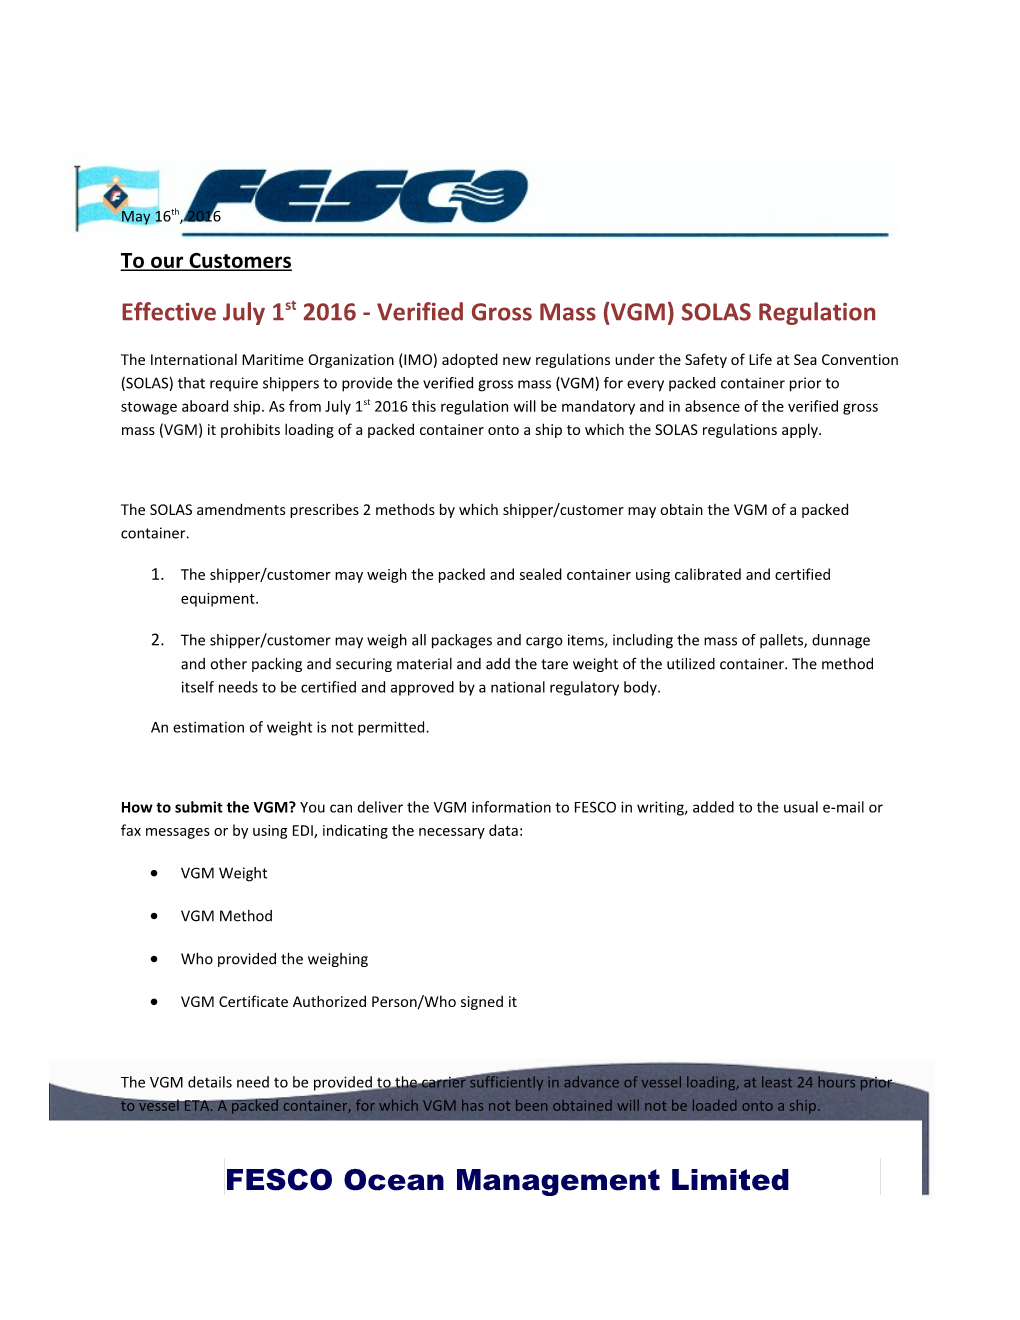 FESCO Ocean Management Limited